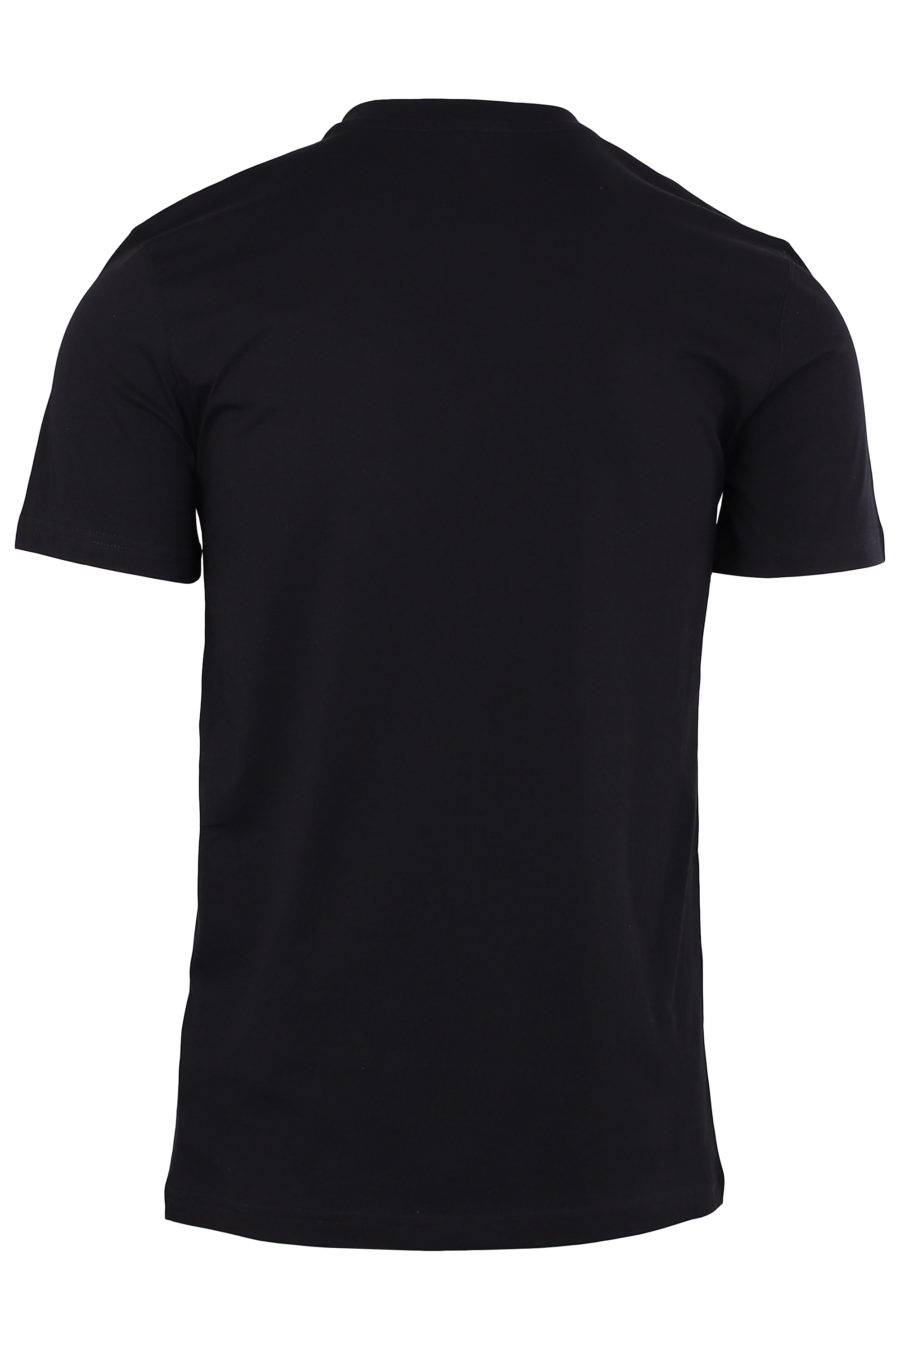 Camiseta negra "Smiley" con logo bordado - IMG 9996